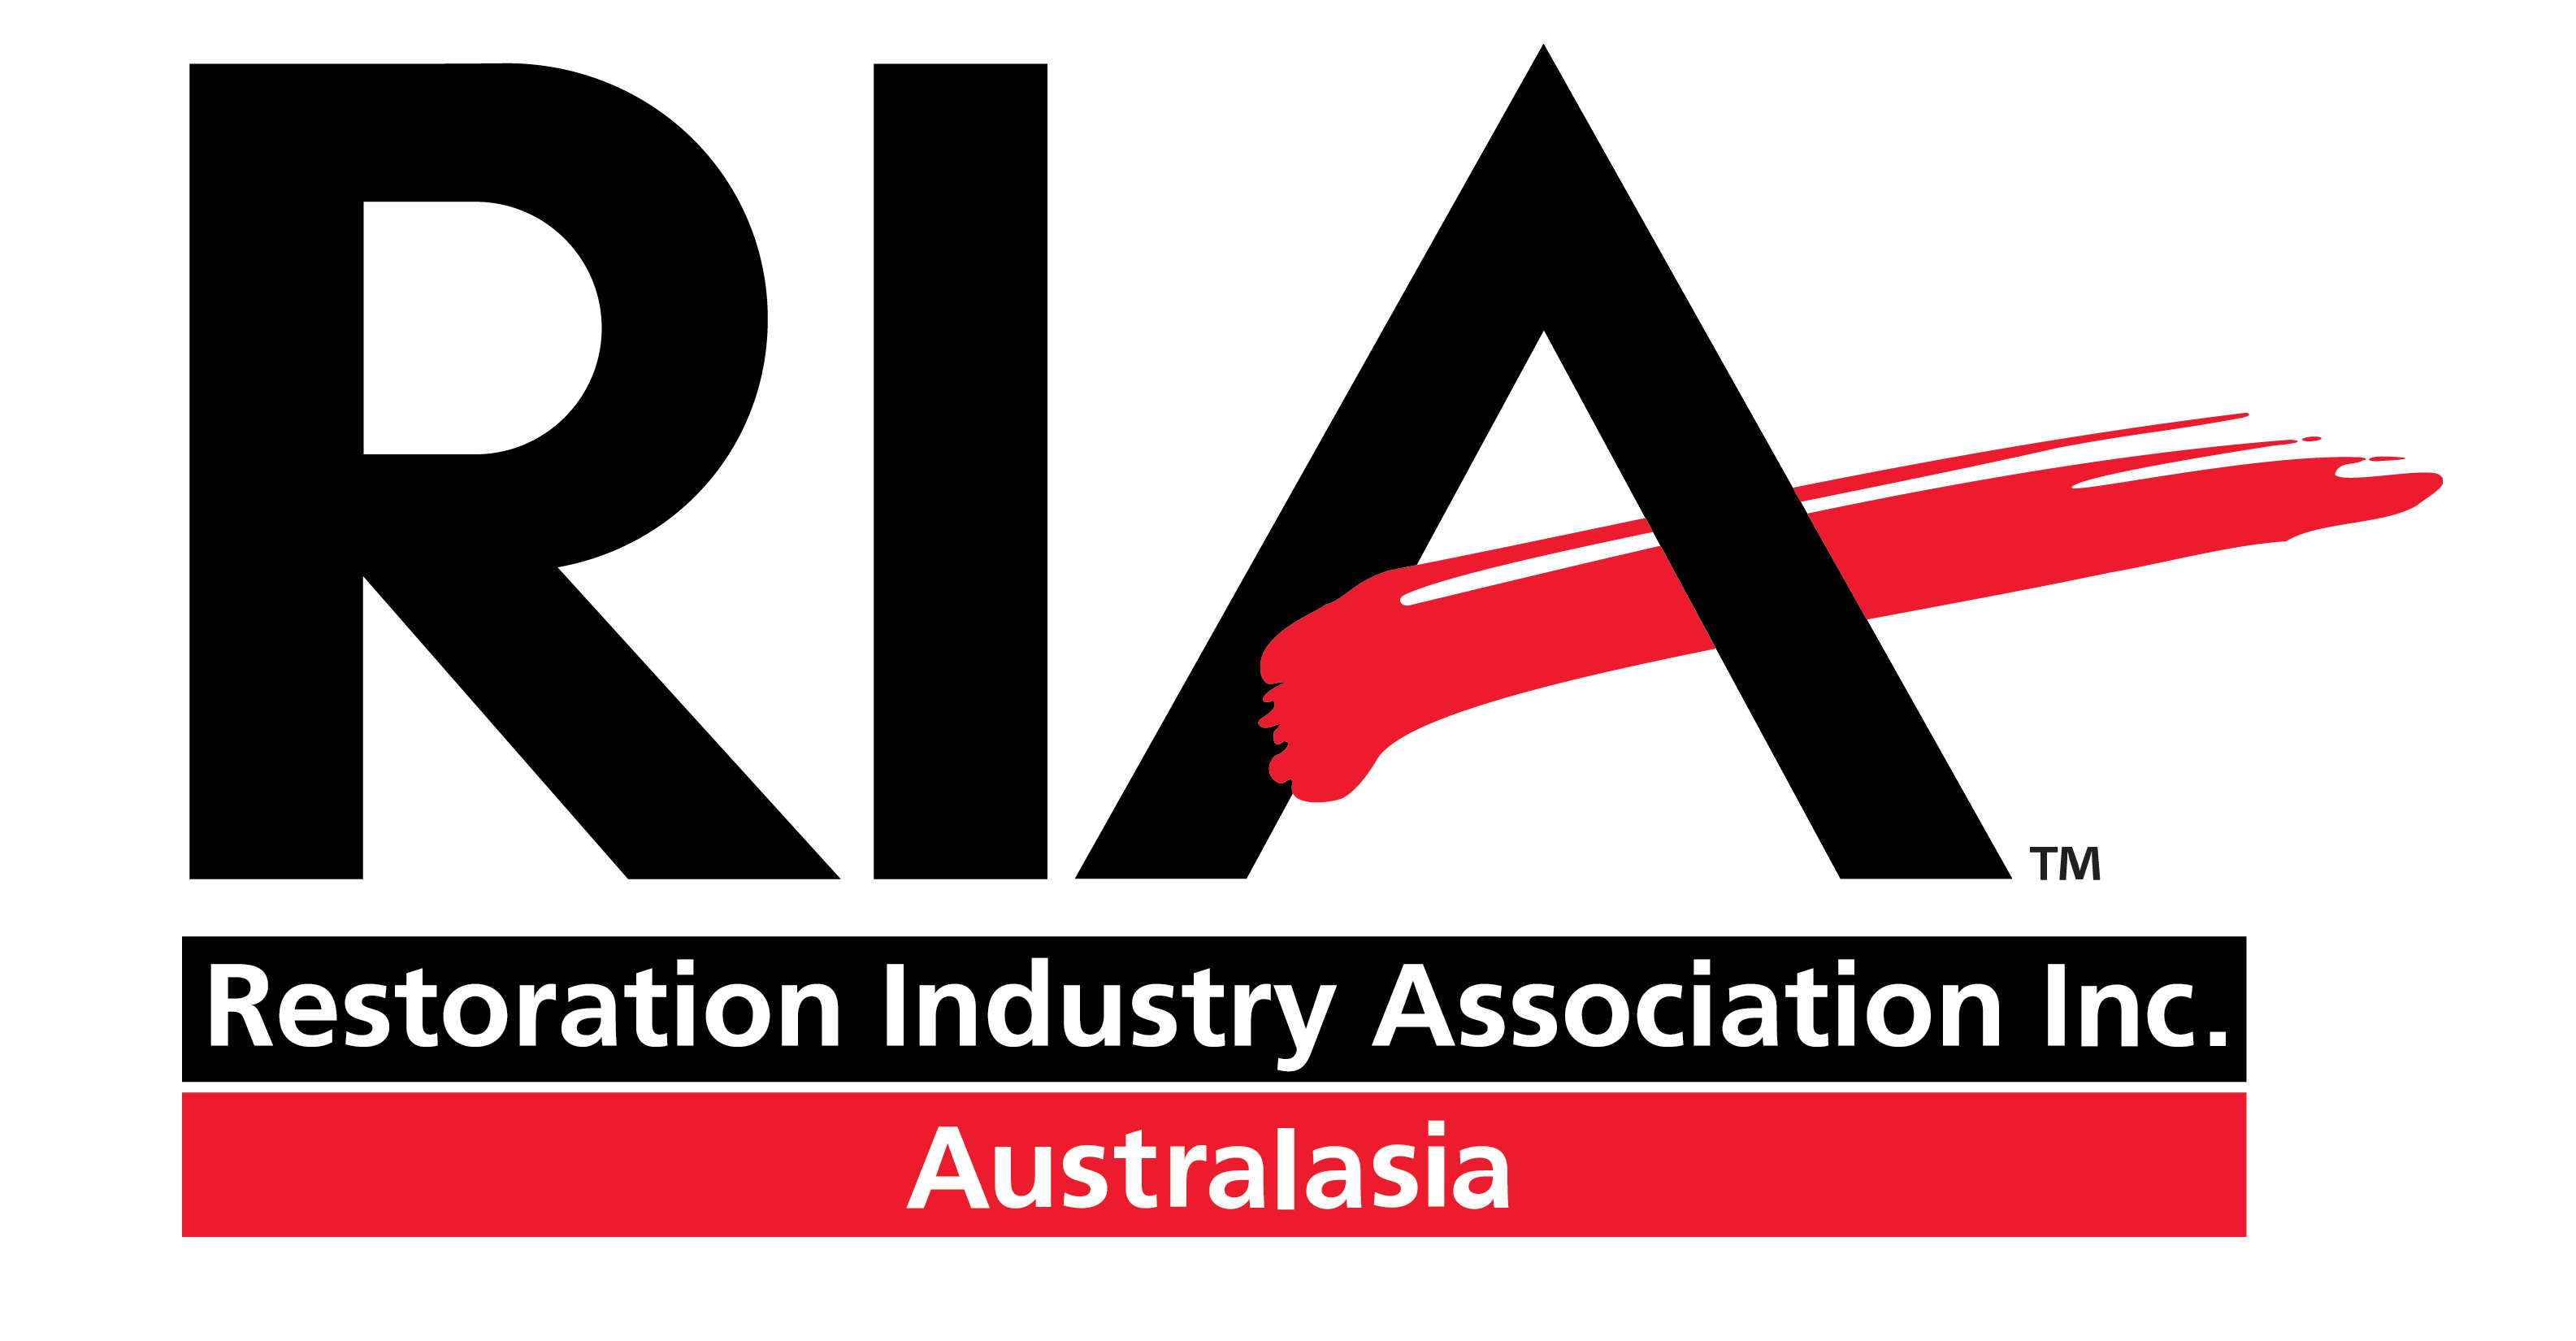 RESP-FIT & Restoration Industry Association Inc (RIA Inc.) – Australasia Partner Announcement